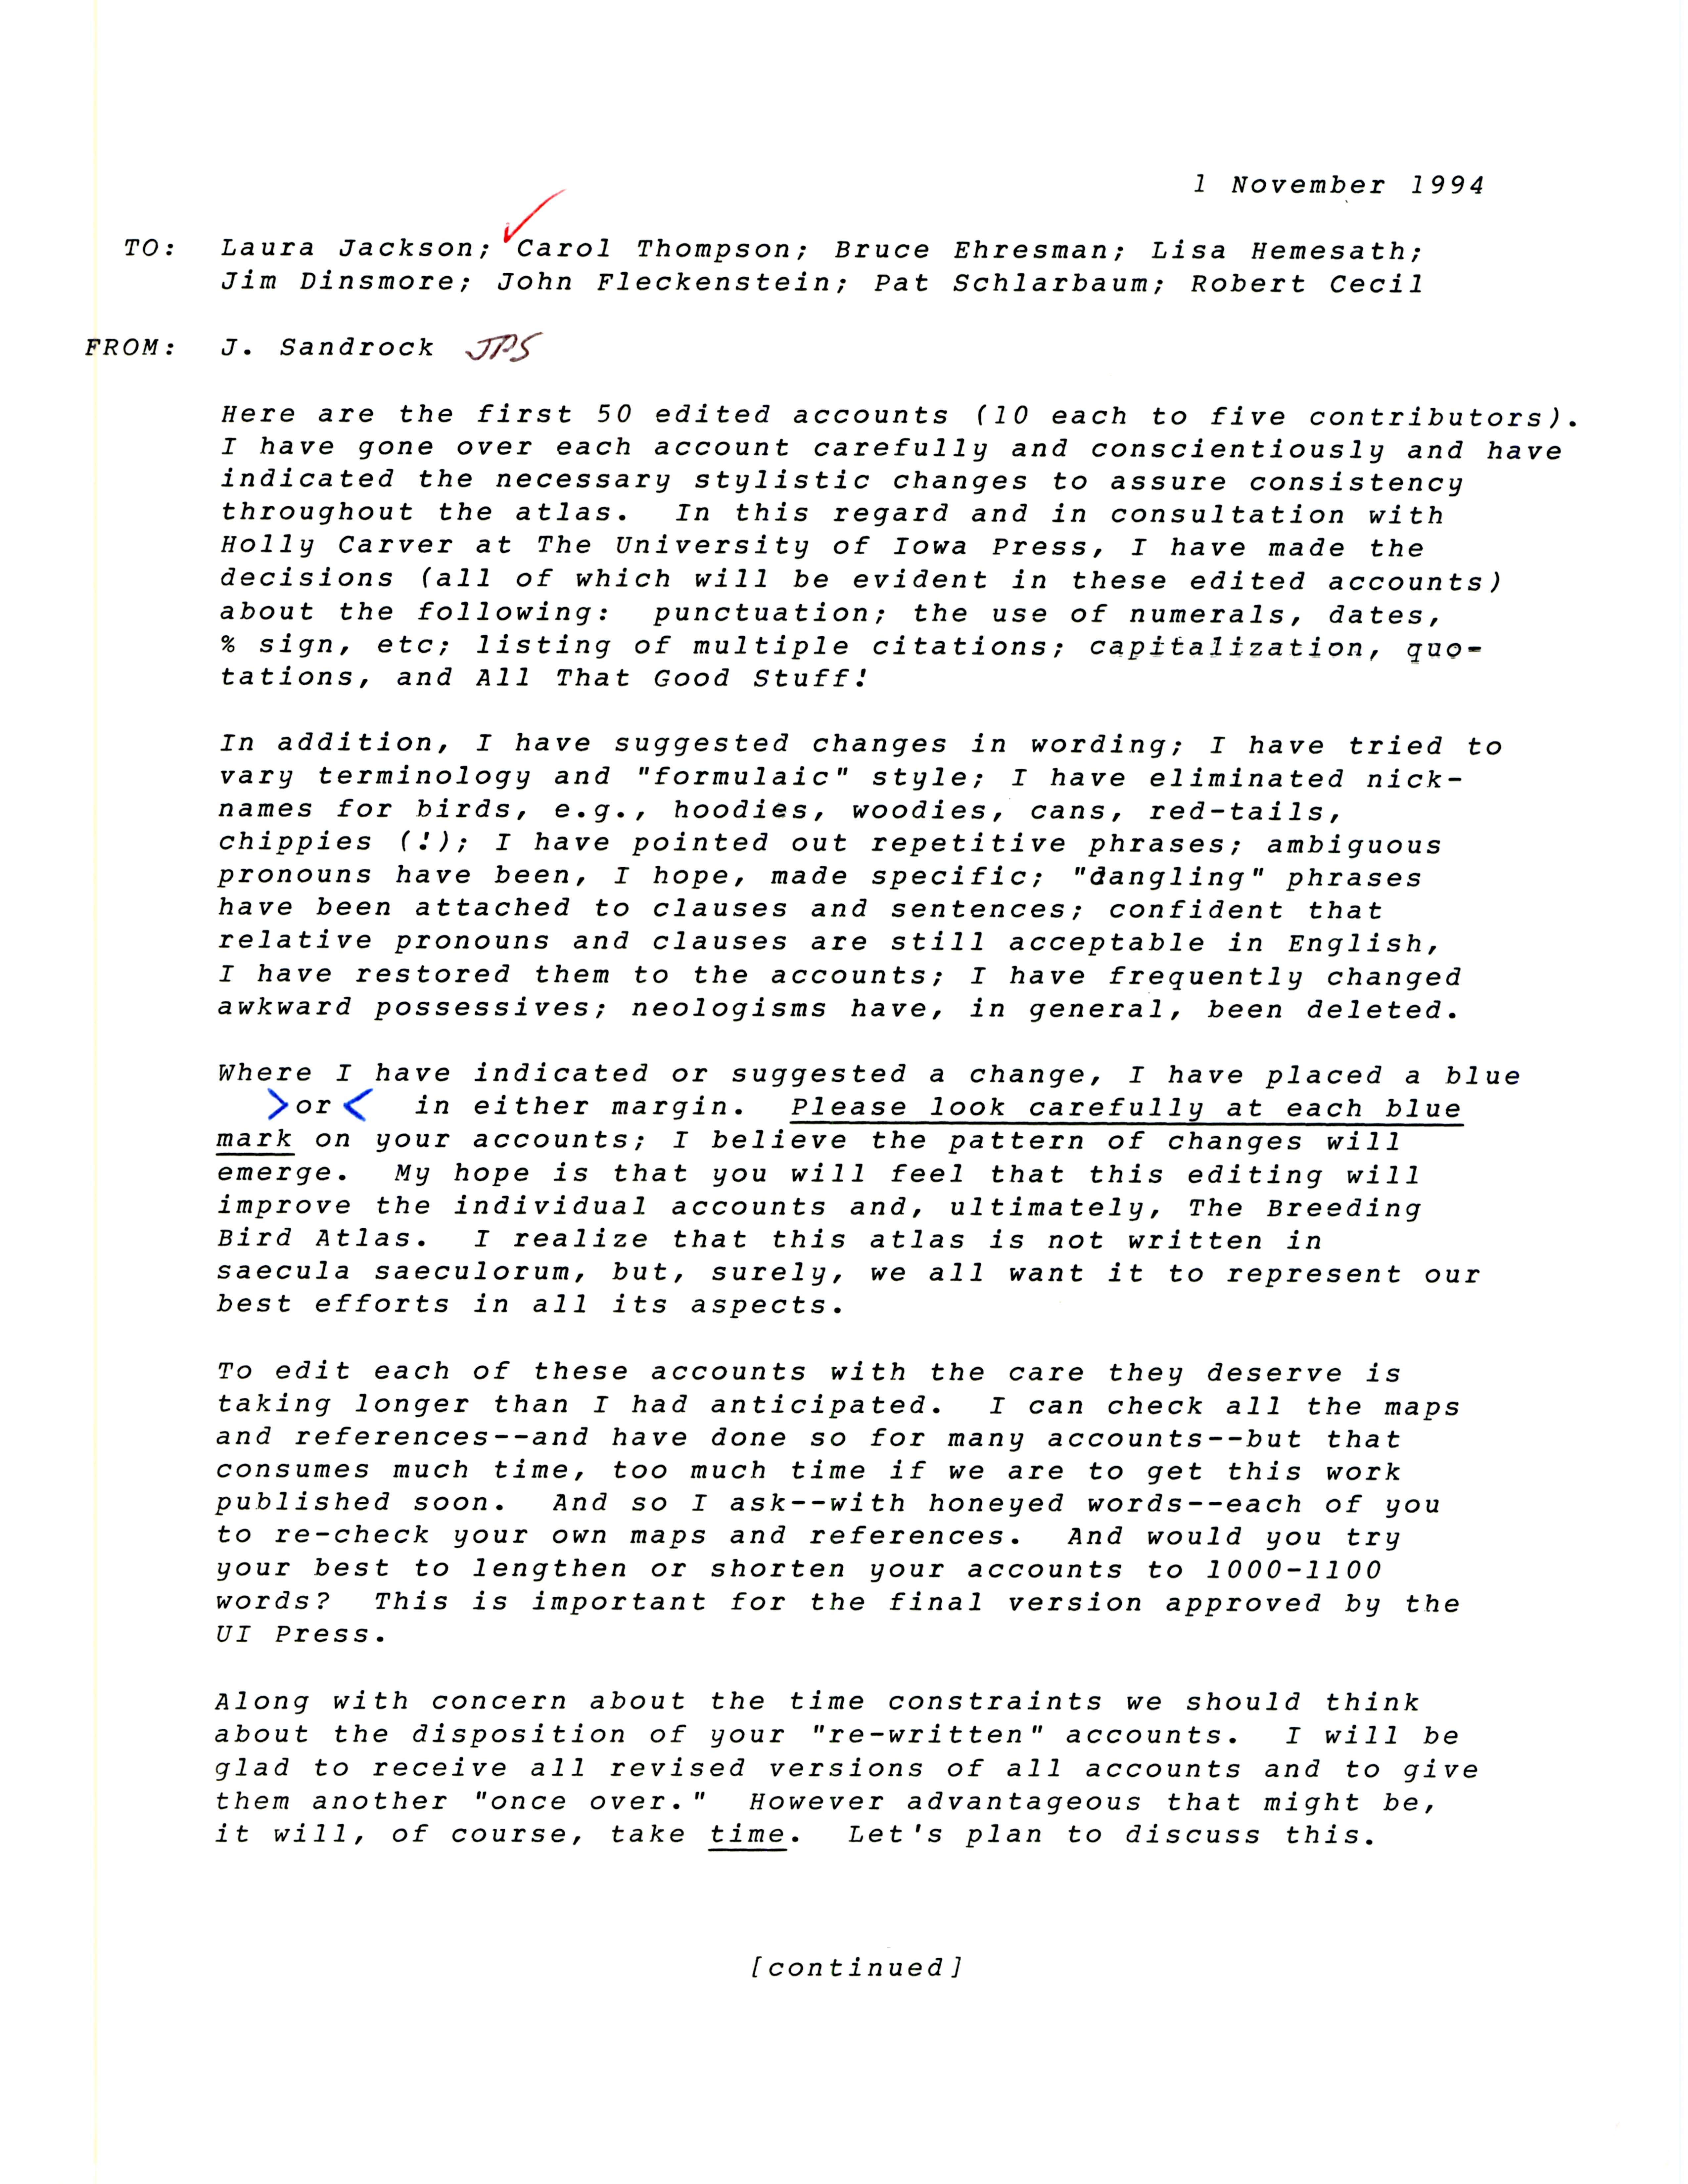 James P. Sandrock letter to individuals involved in the Breeding Bird Atlas Project regarding publication details, November 1, 1994